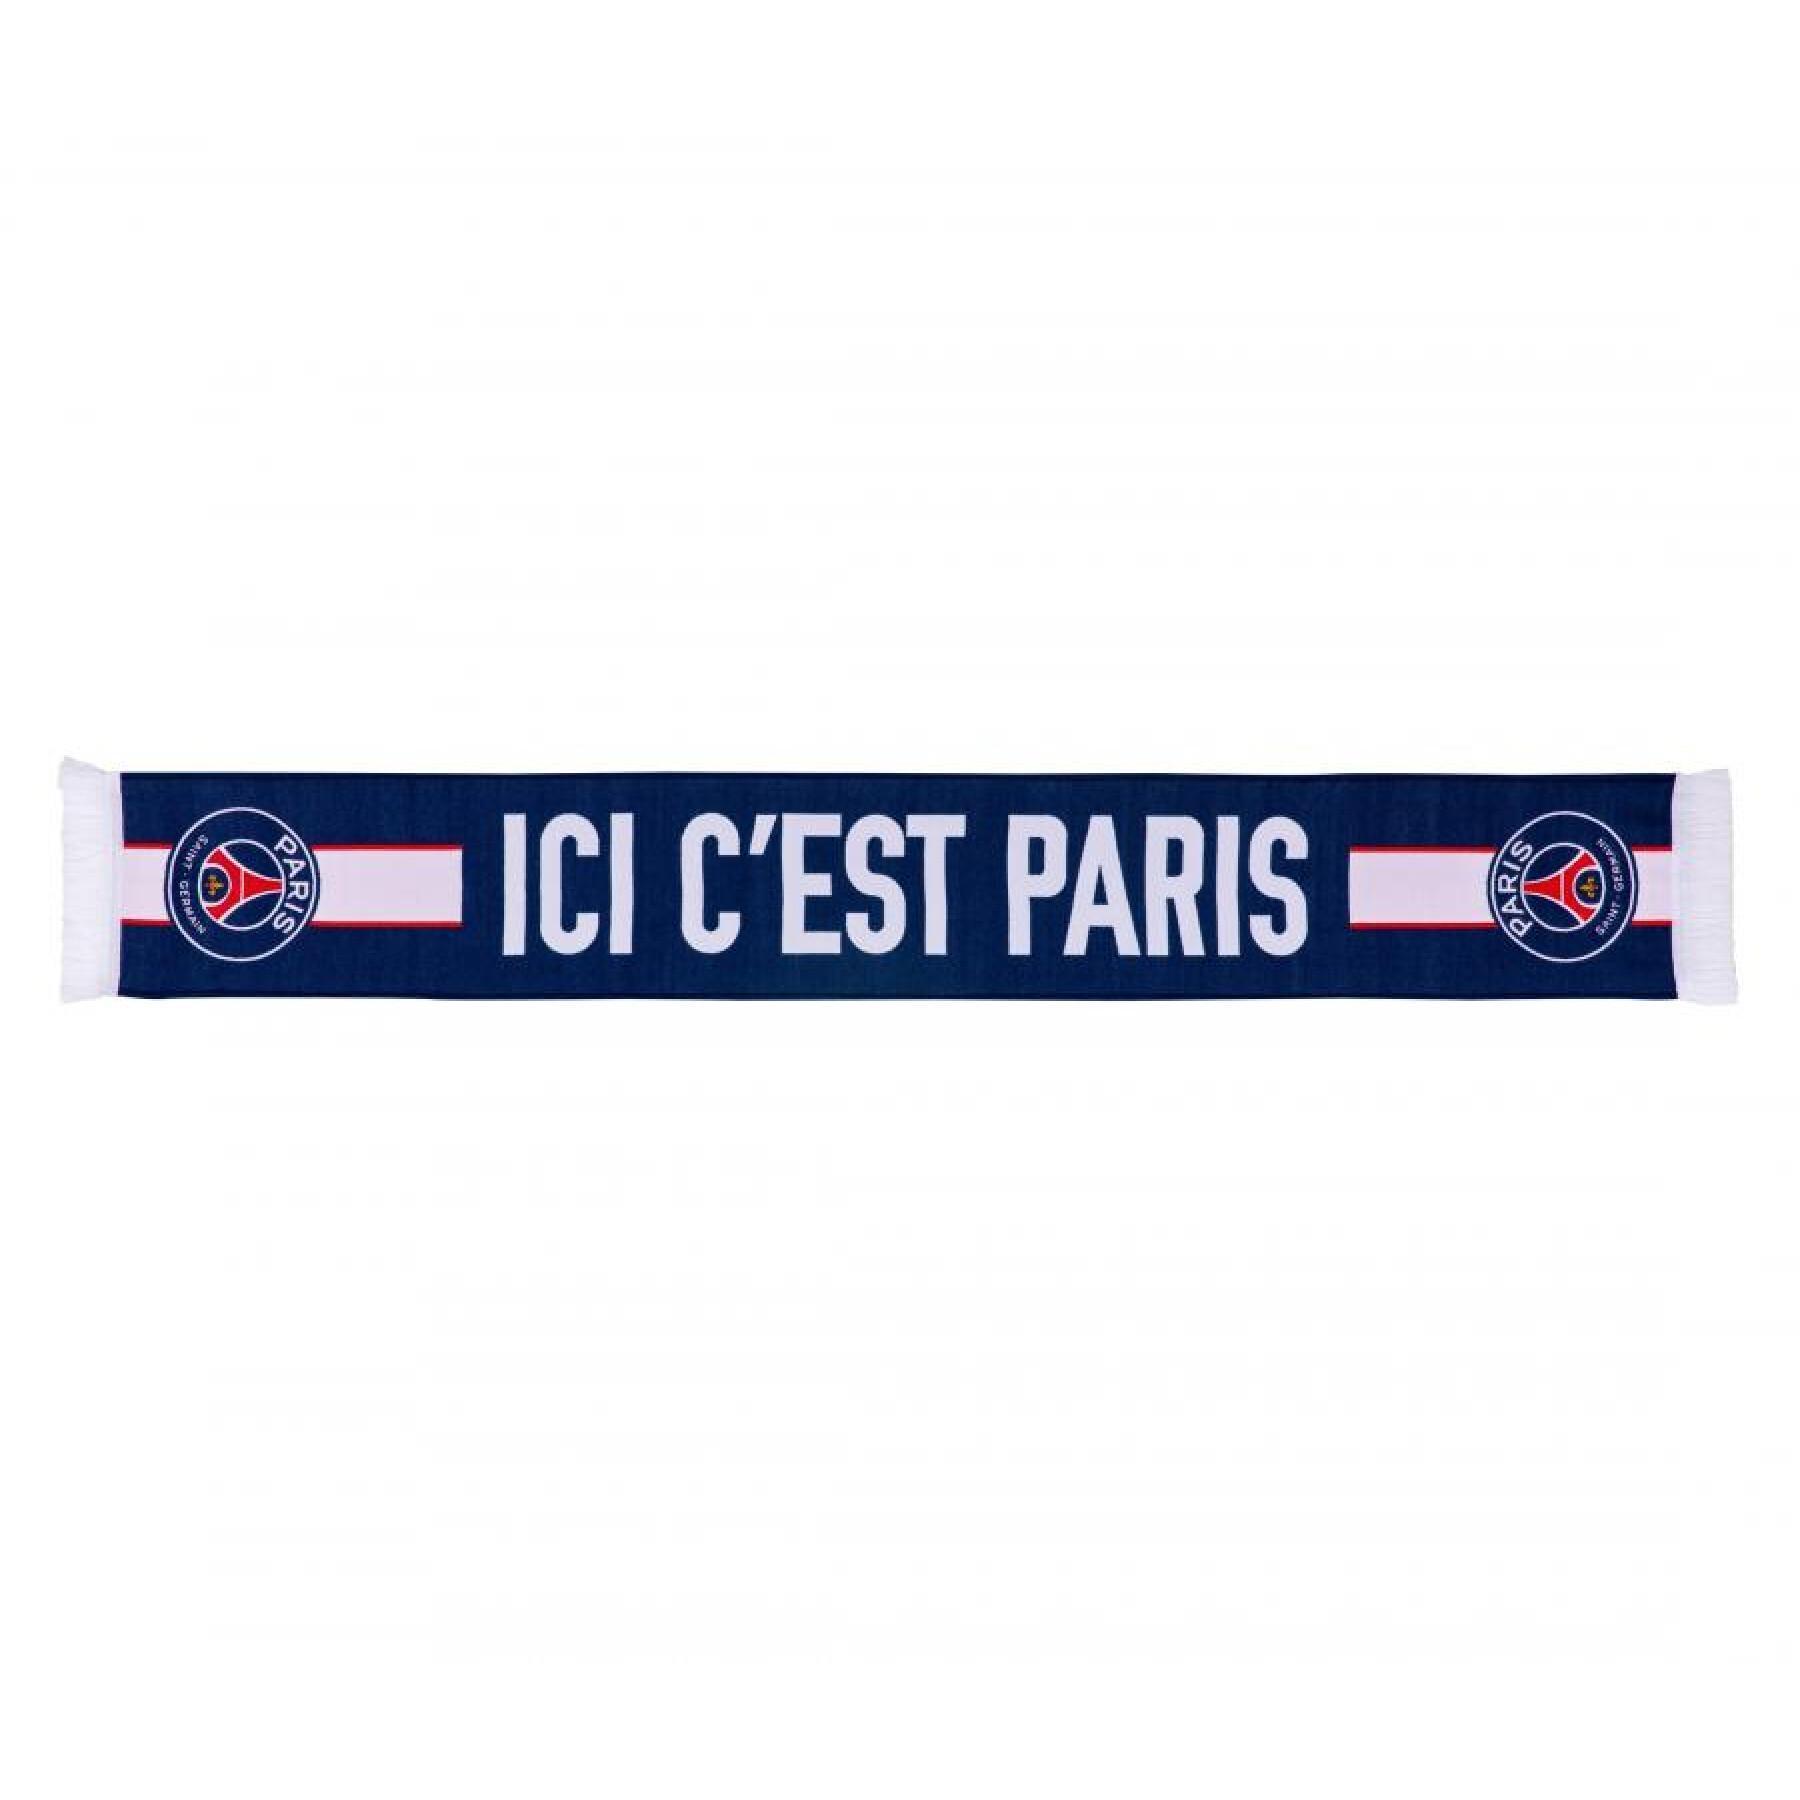 lenço de pescoço PSG Ici c'est Paris 2022/23